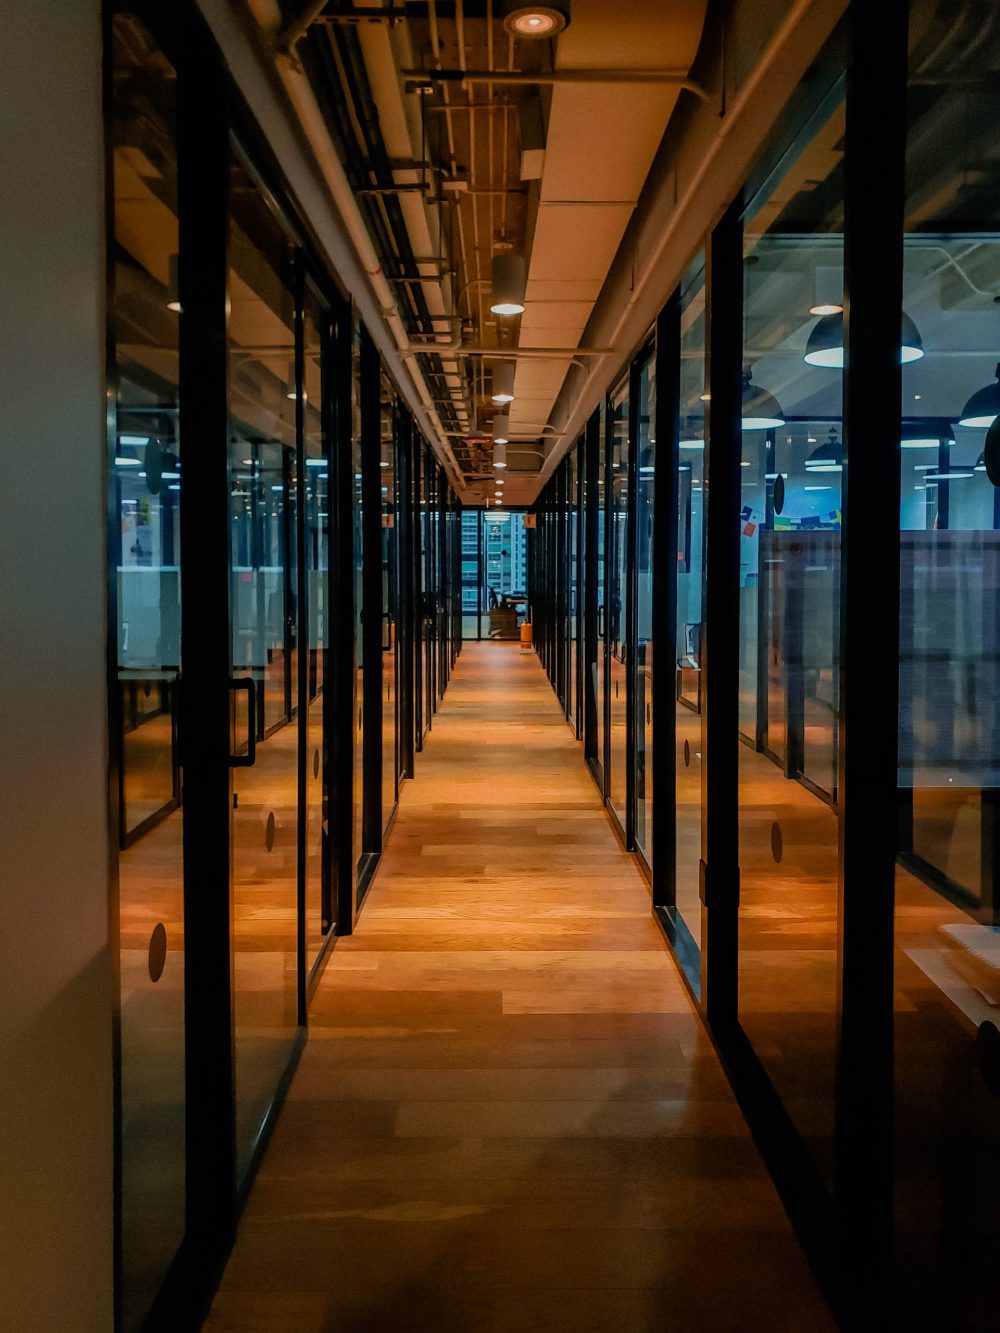 The hallway of a company